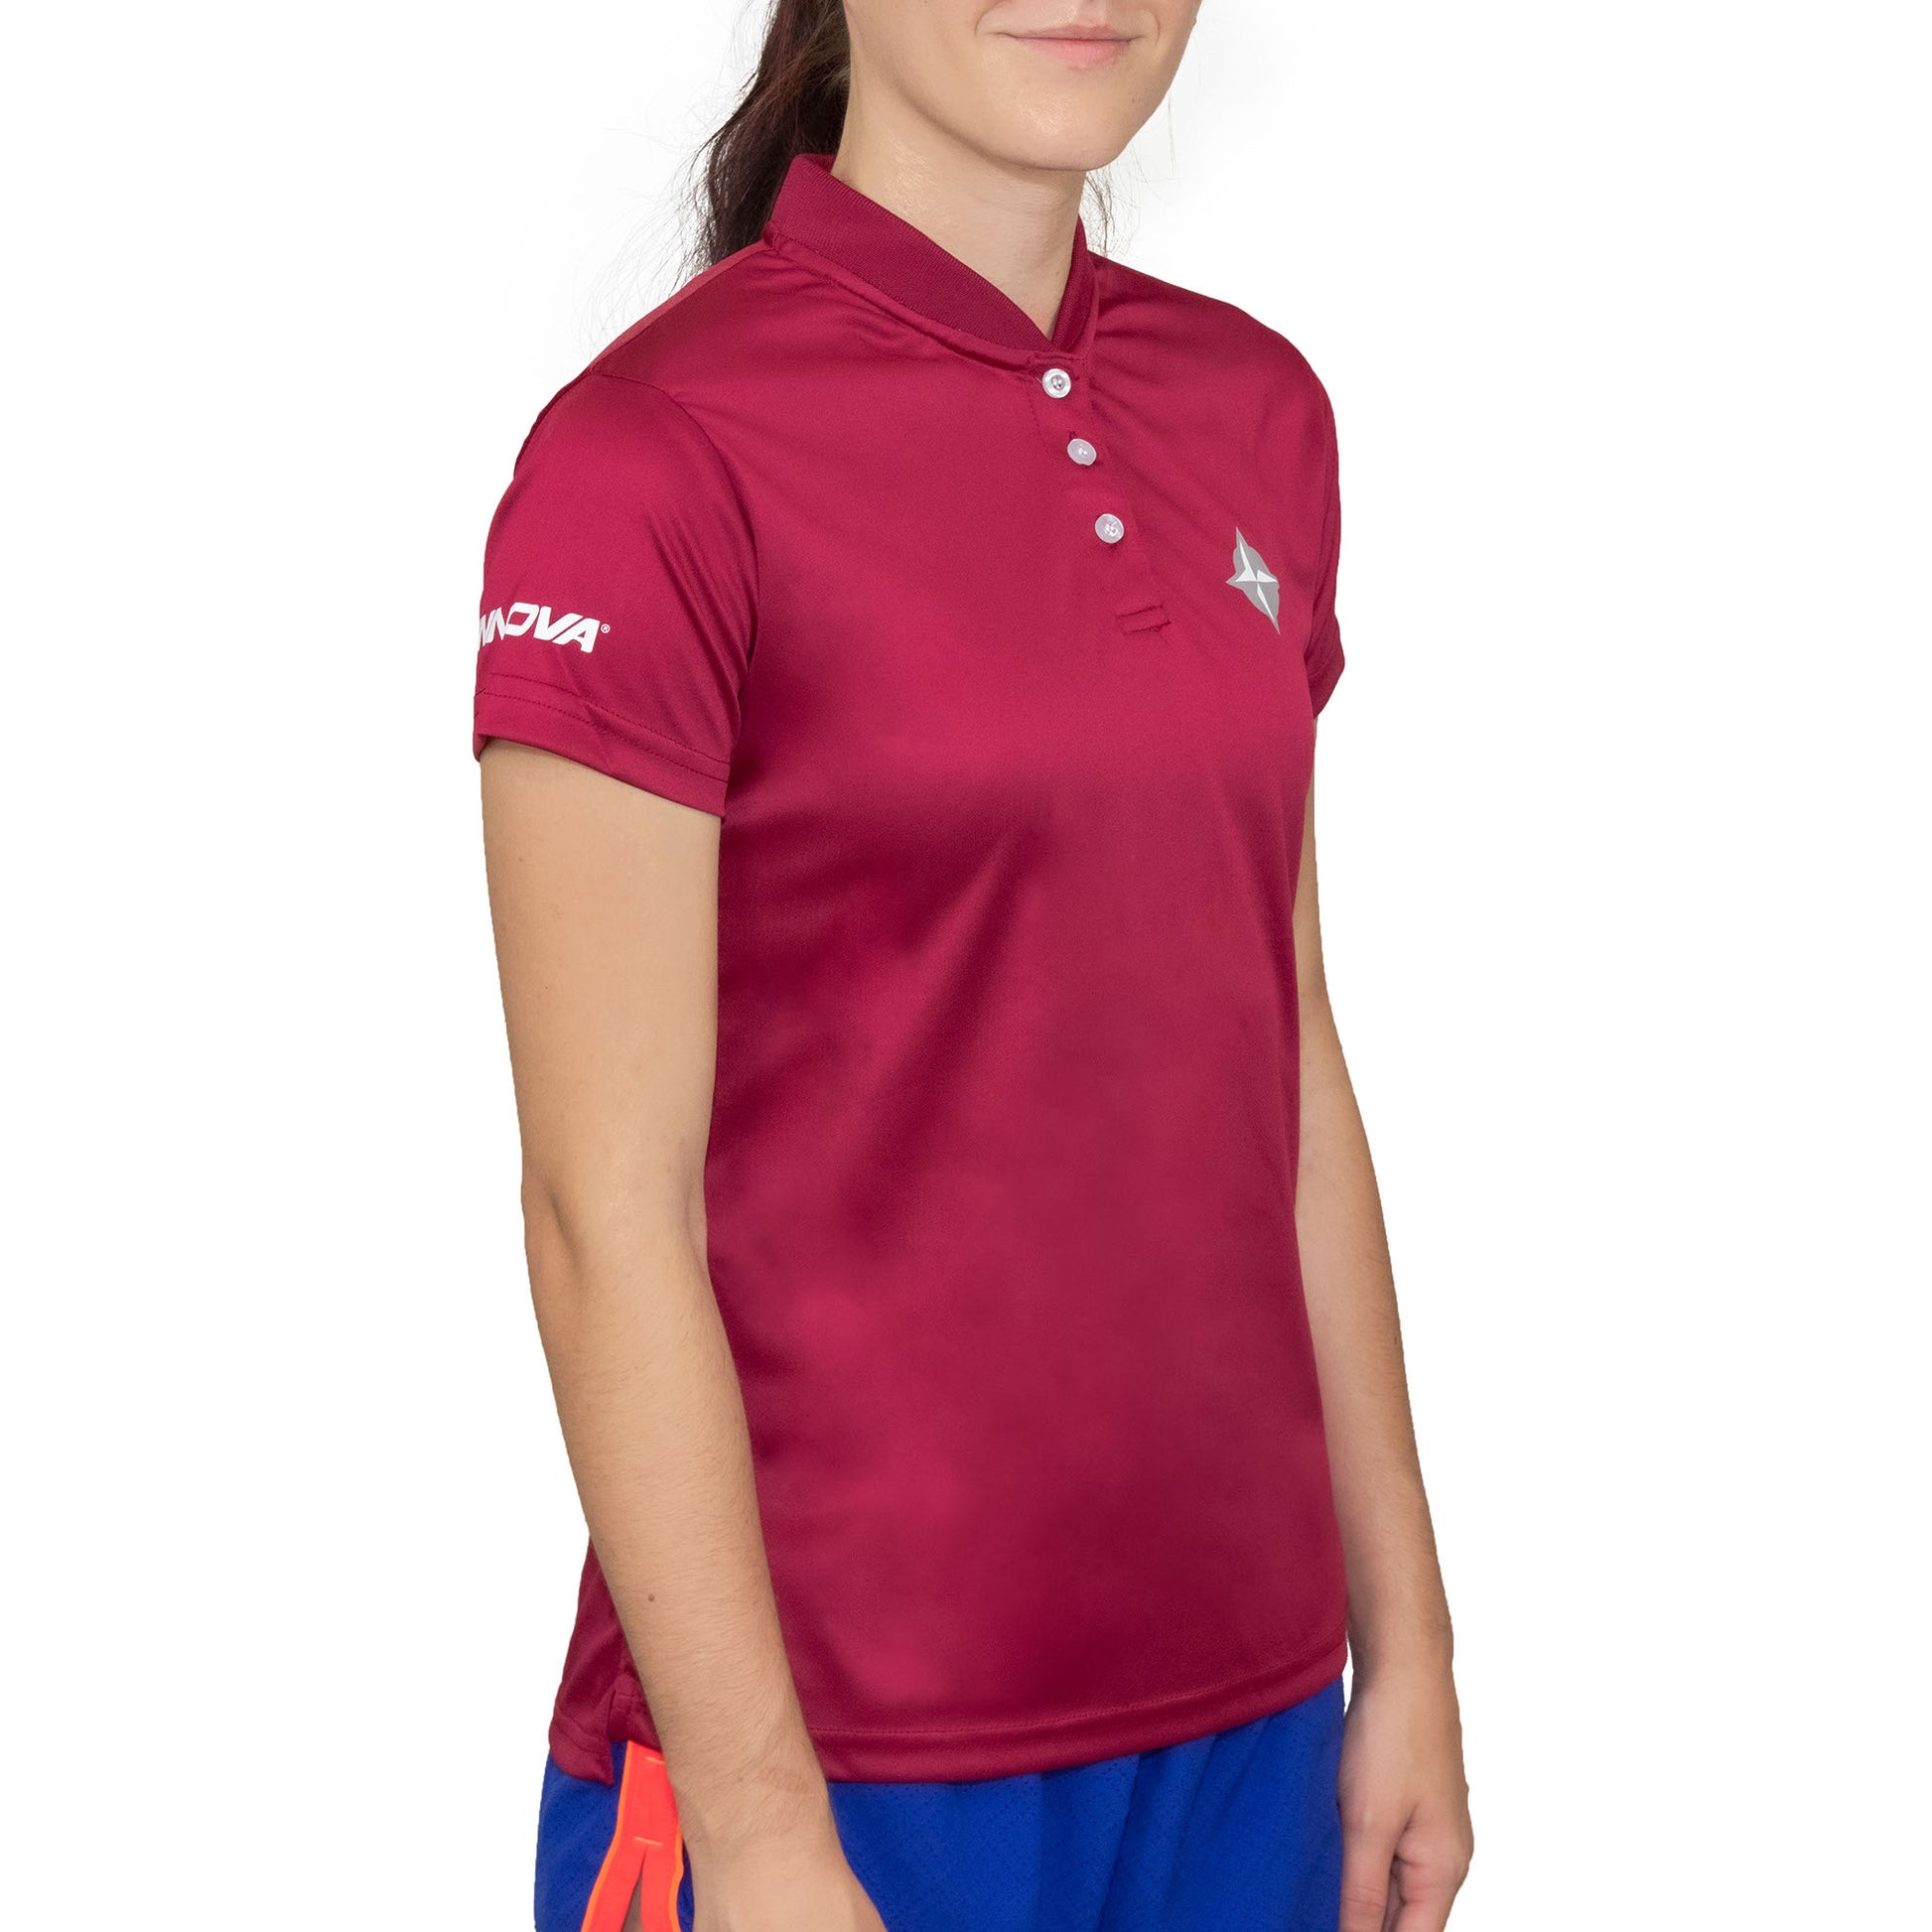 innova-ladies-performance-prime-star-blade-short-sleeve-polo-disc-golf-apparel Large Red